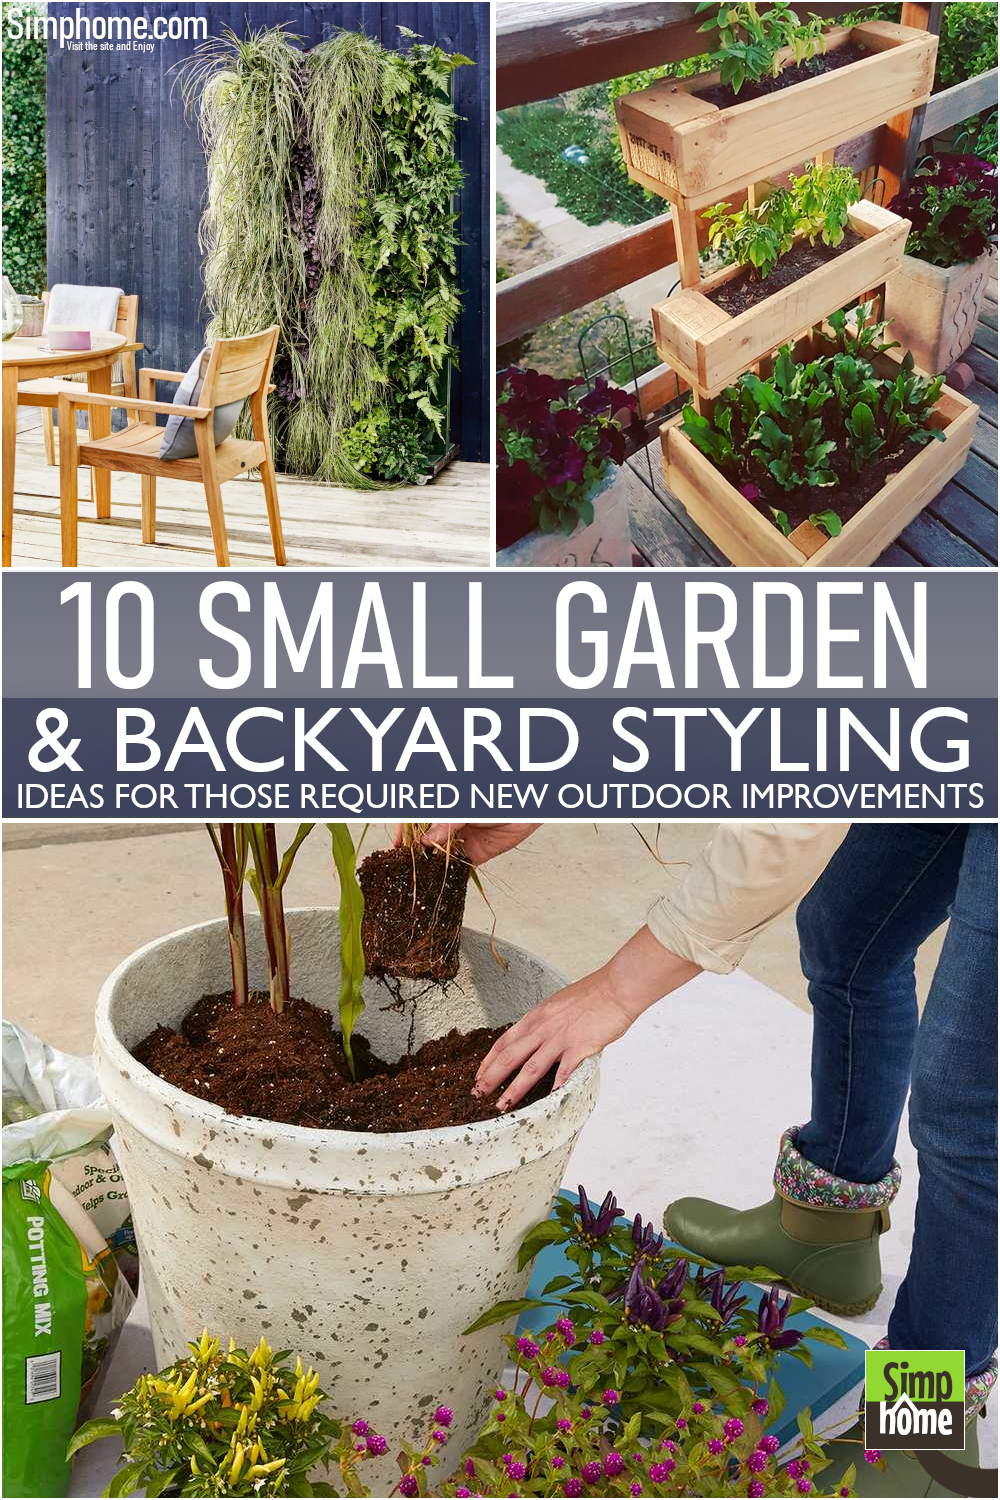 10 Small Garden and Backyard Styling Ideas